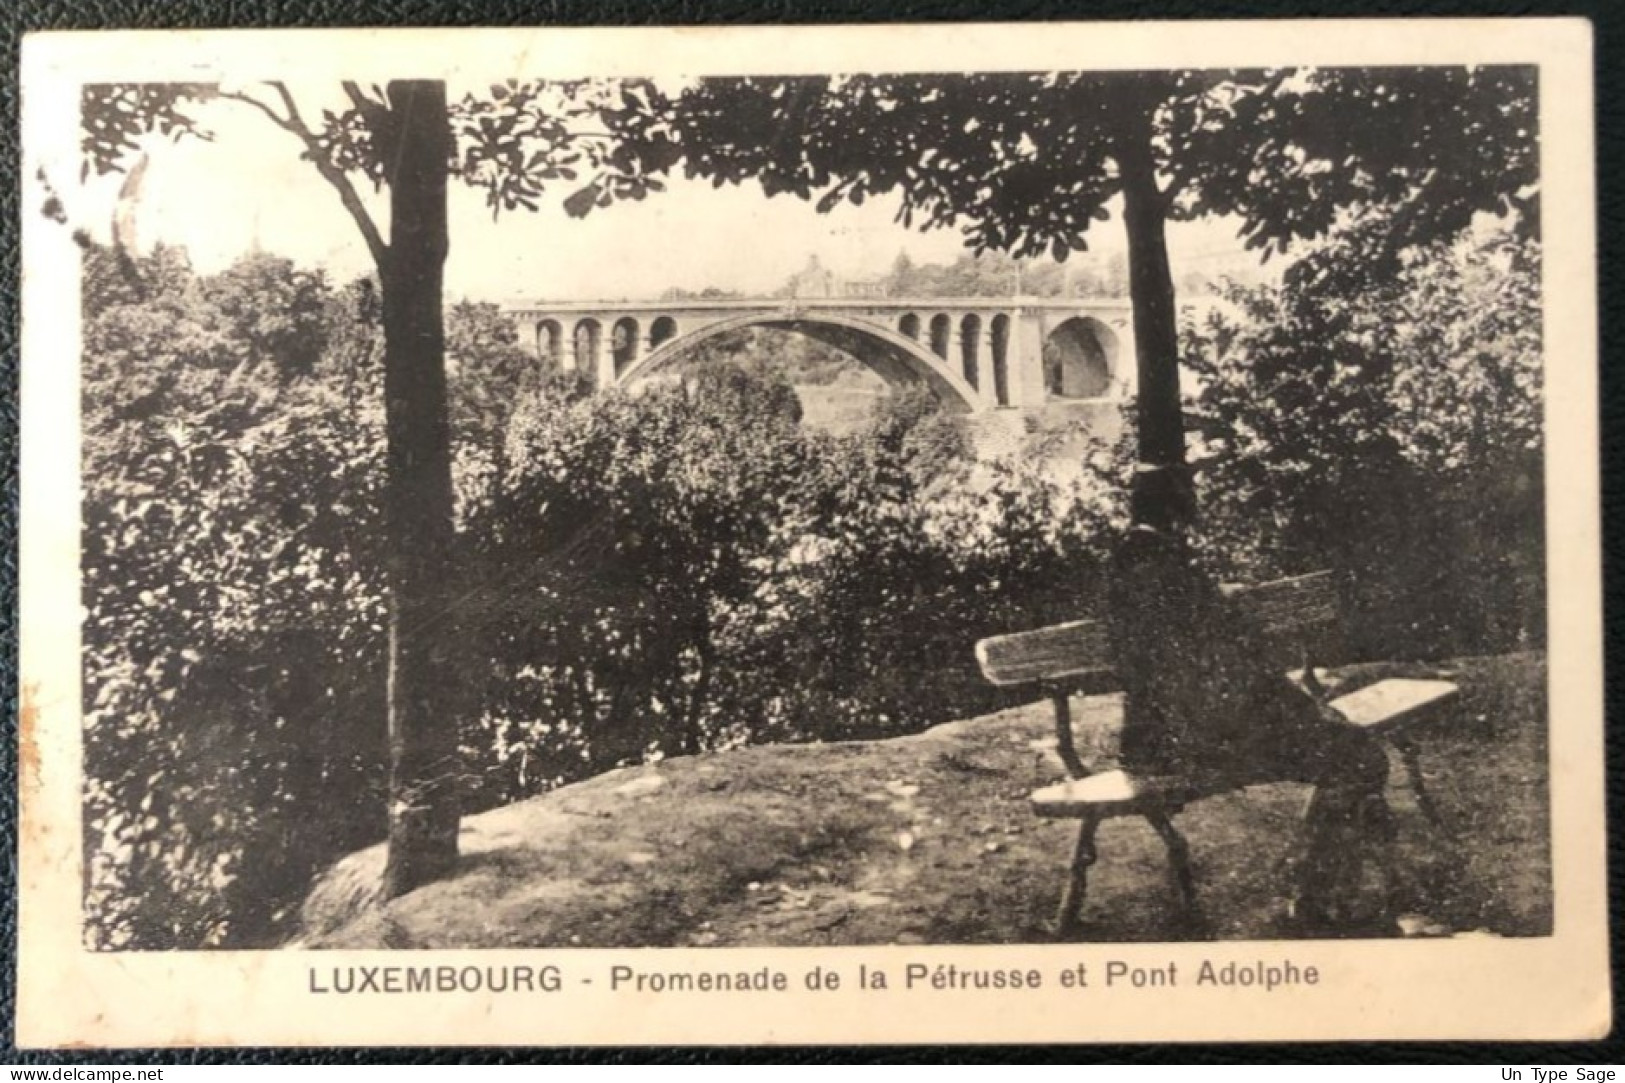 Luxembourg, Divers Sur CPA 1936 - (A191) - Briefe U. Dokumente